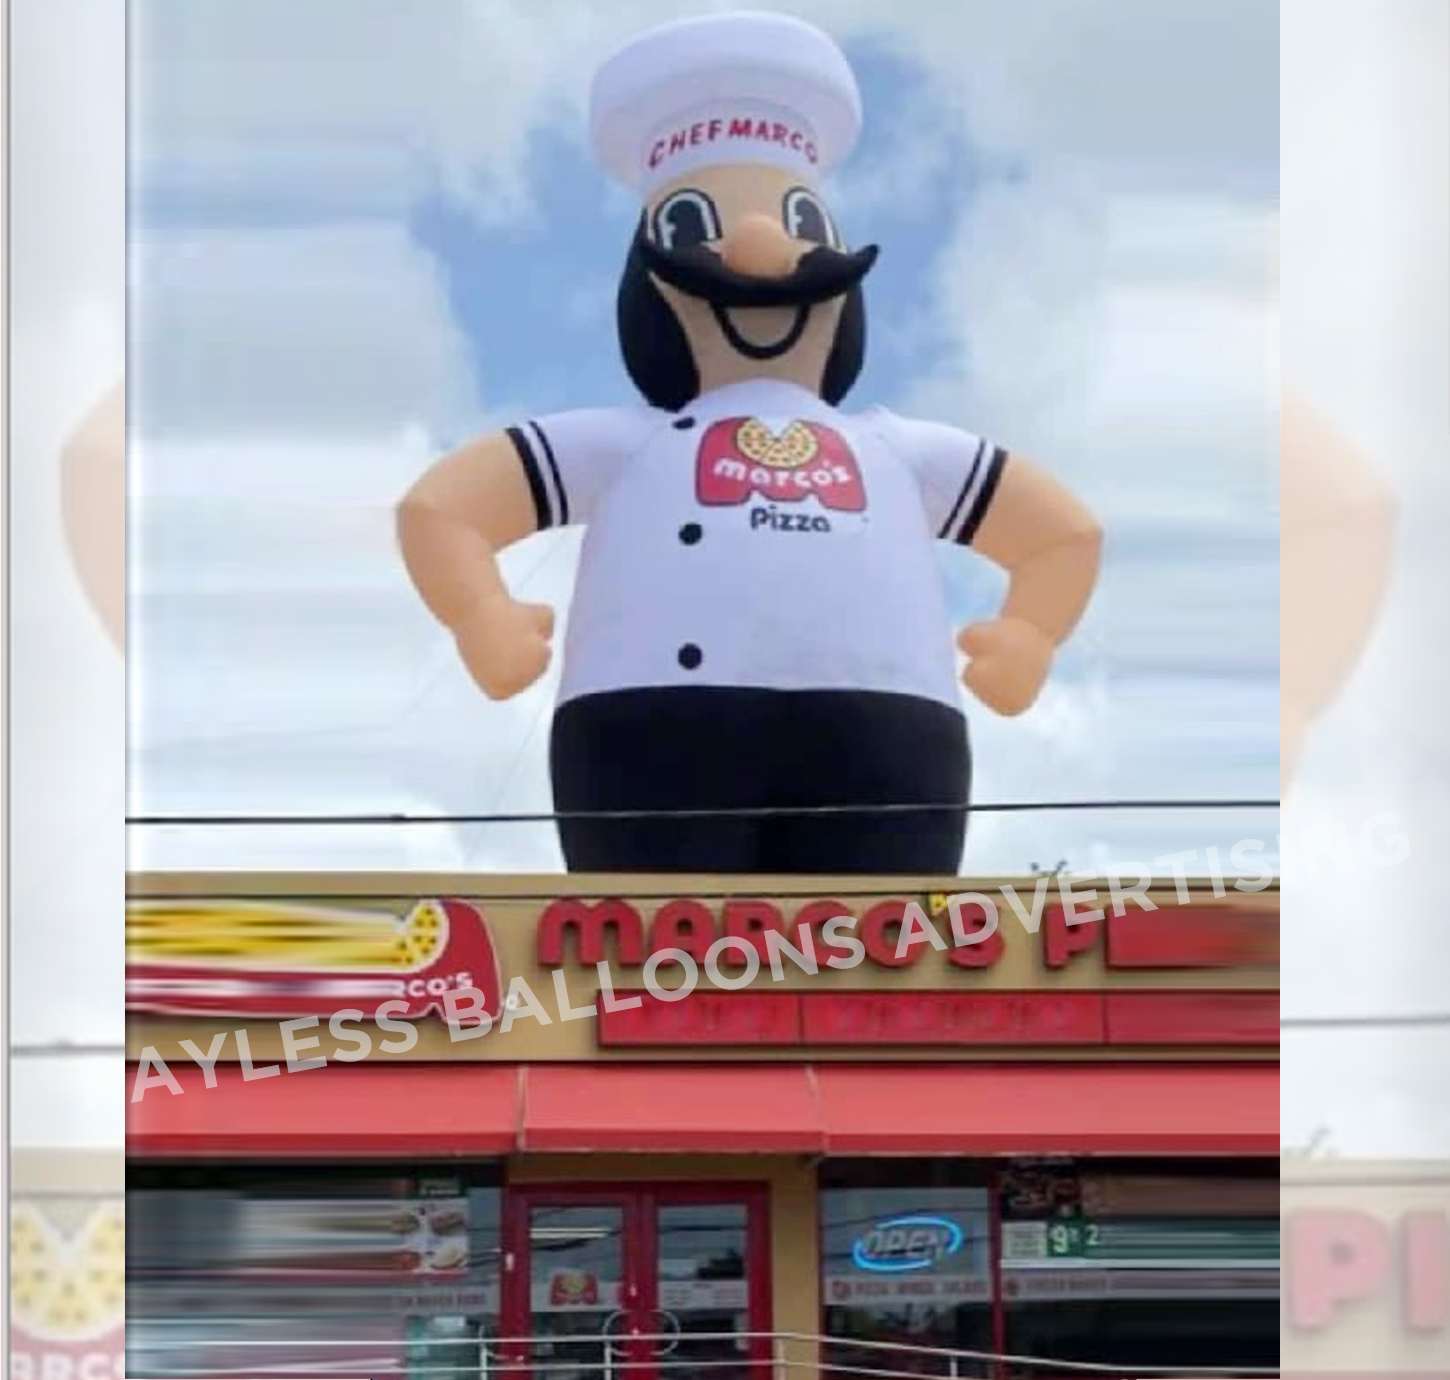 Marco's pizza giant advertising balloon